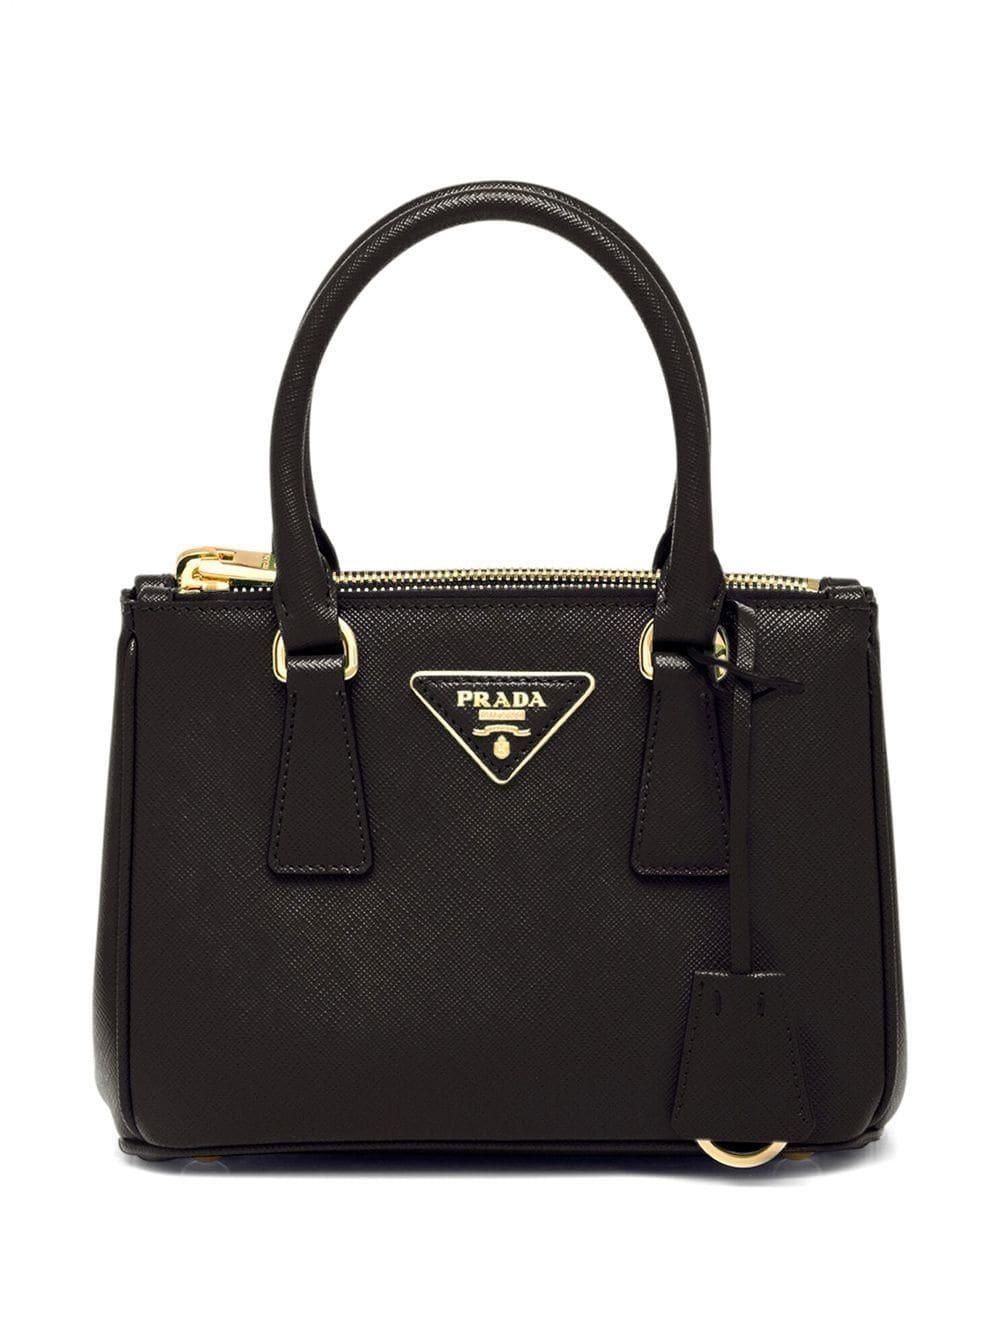 Prada Galleria Saffiano Leather Mini-bag in Black | Lyst